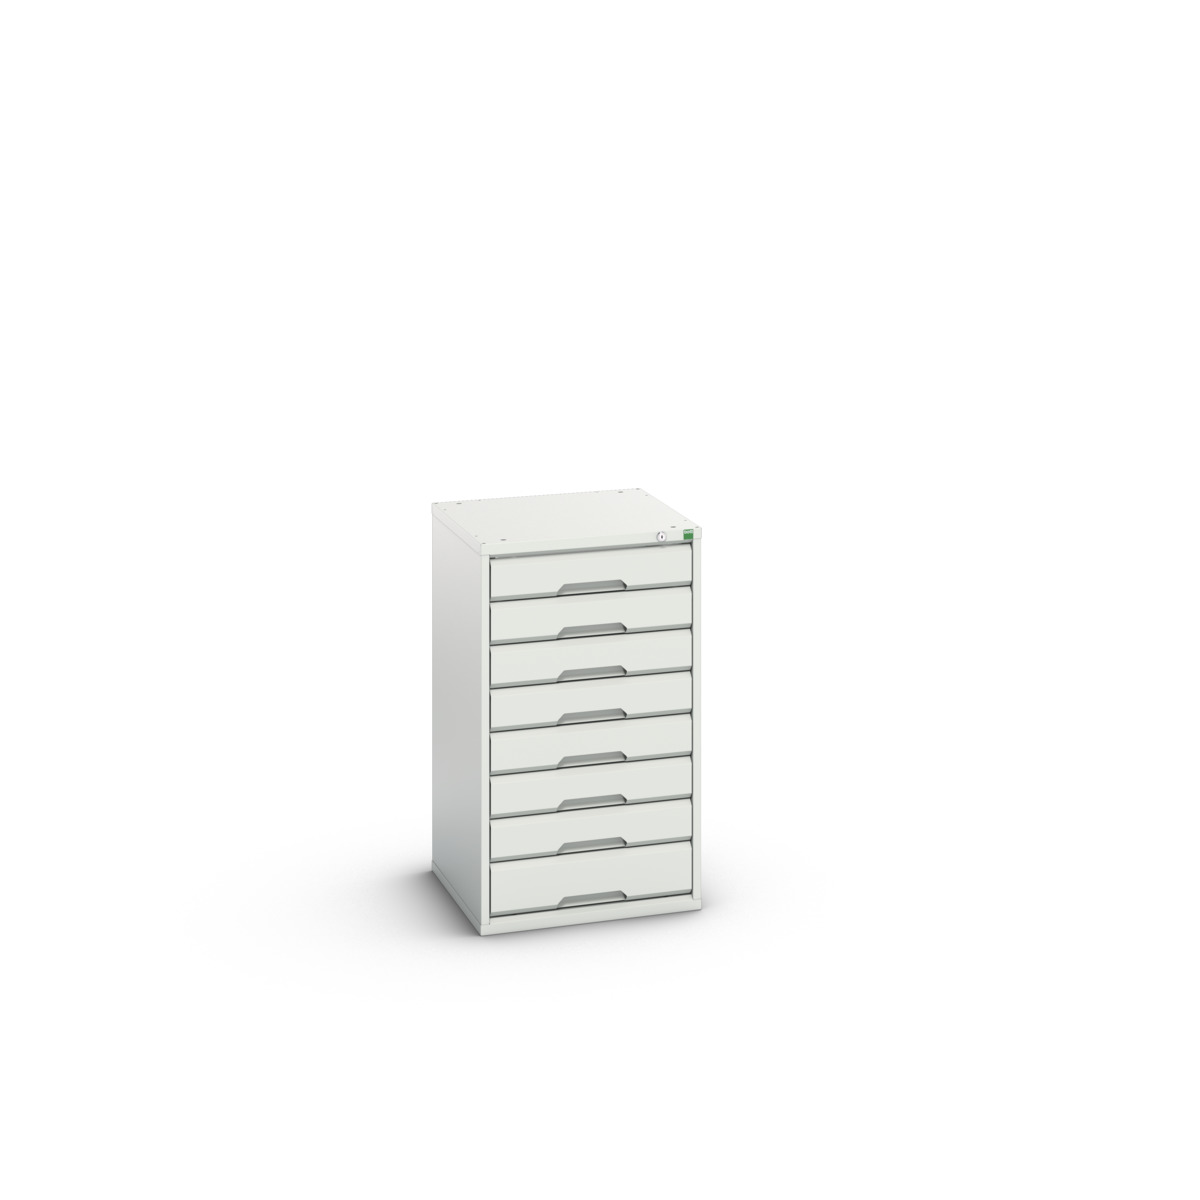 16925033.16 - verso drawer cabinet